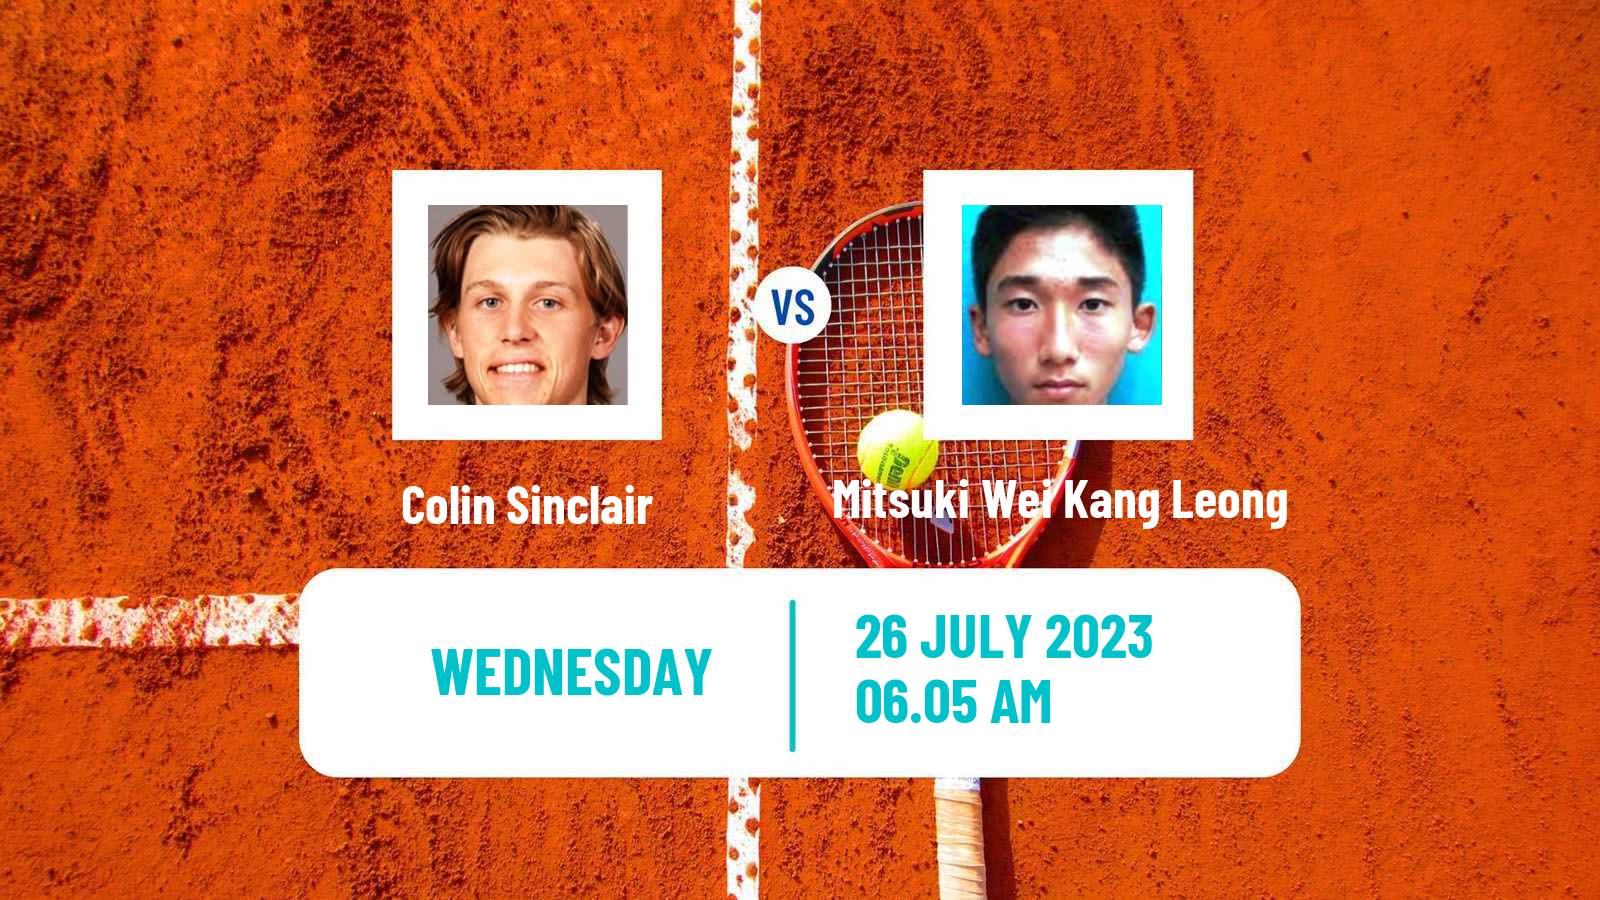 Tennis Davis Cup Group III Colin Sinclair - Mitsuki Wei Kang Leong